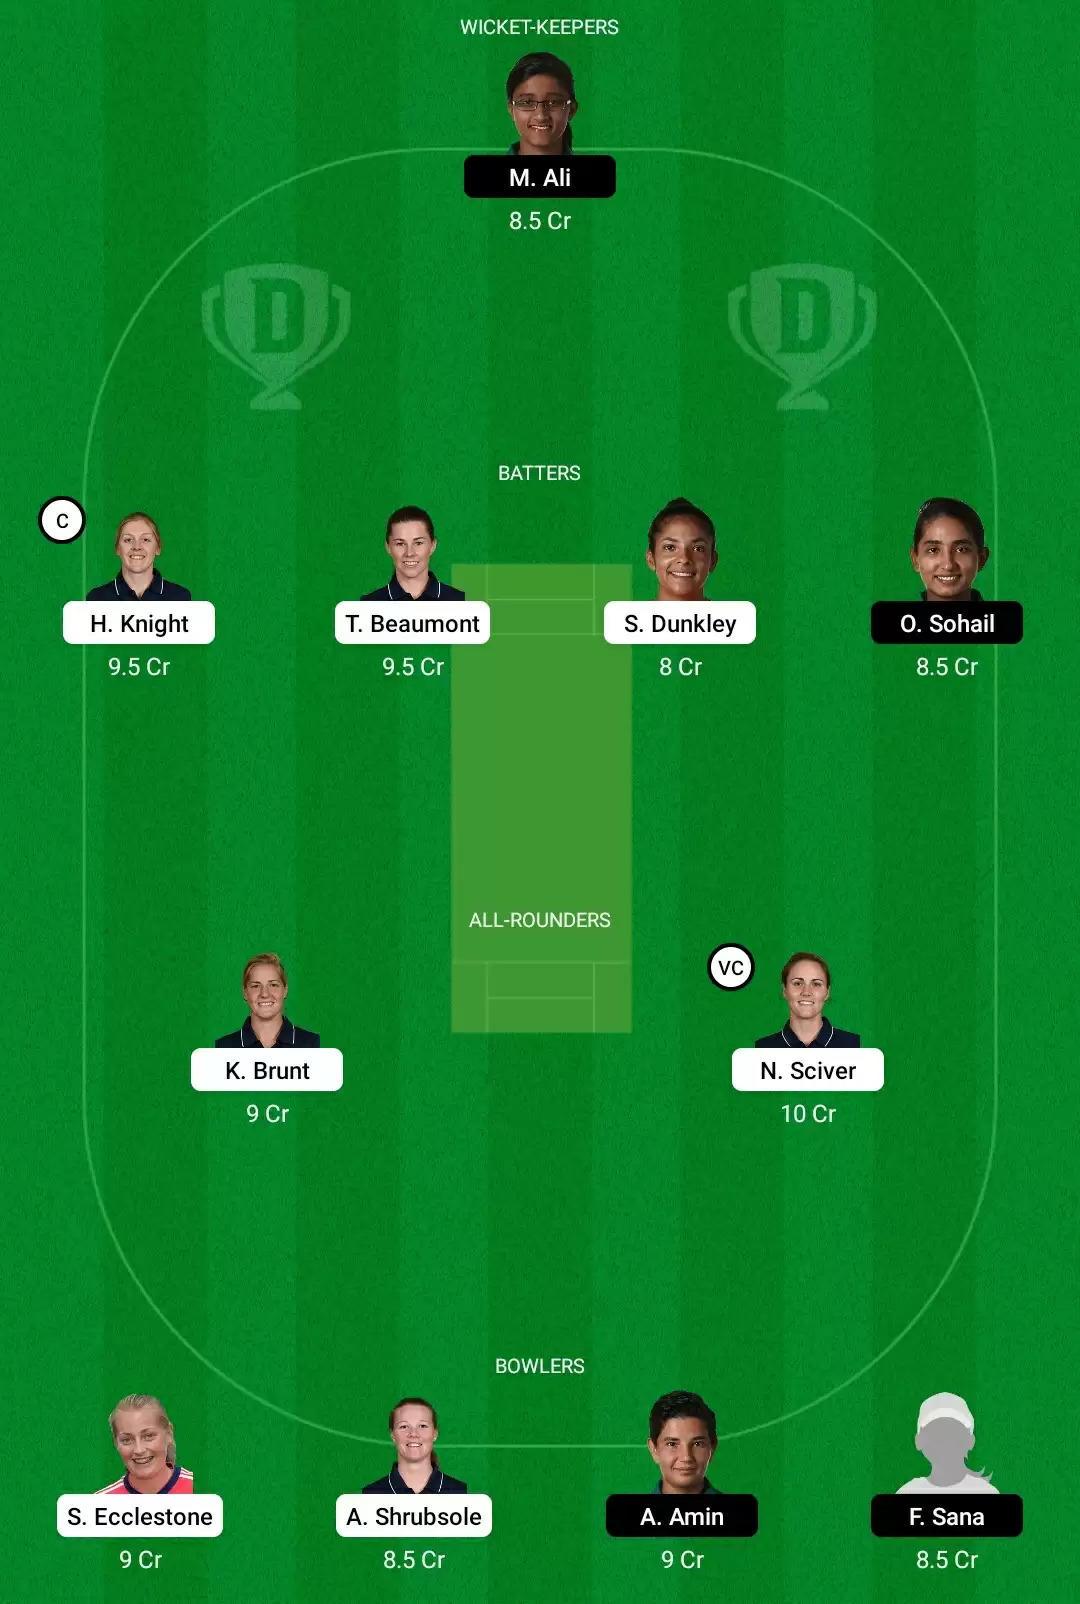 EN-W vs PK-W Dream11 Prediction, Fantasy Cricket Tips, Playing XI, Dream11 Team, Pitch And Weather Report – England Women Vs Pakistan Women Match, ICC Women’s World Cup 2022